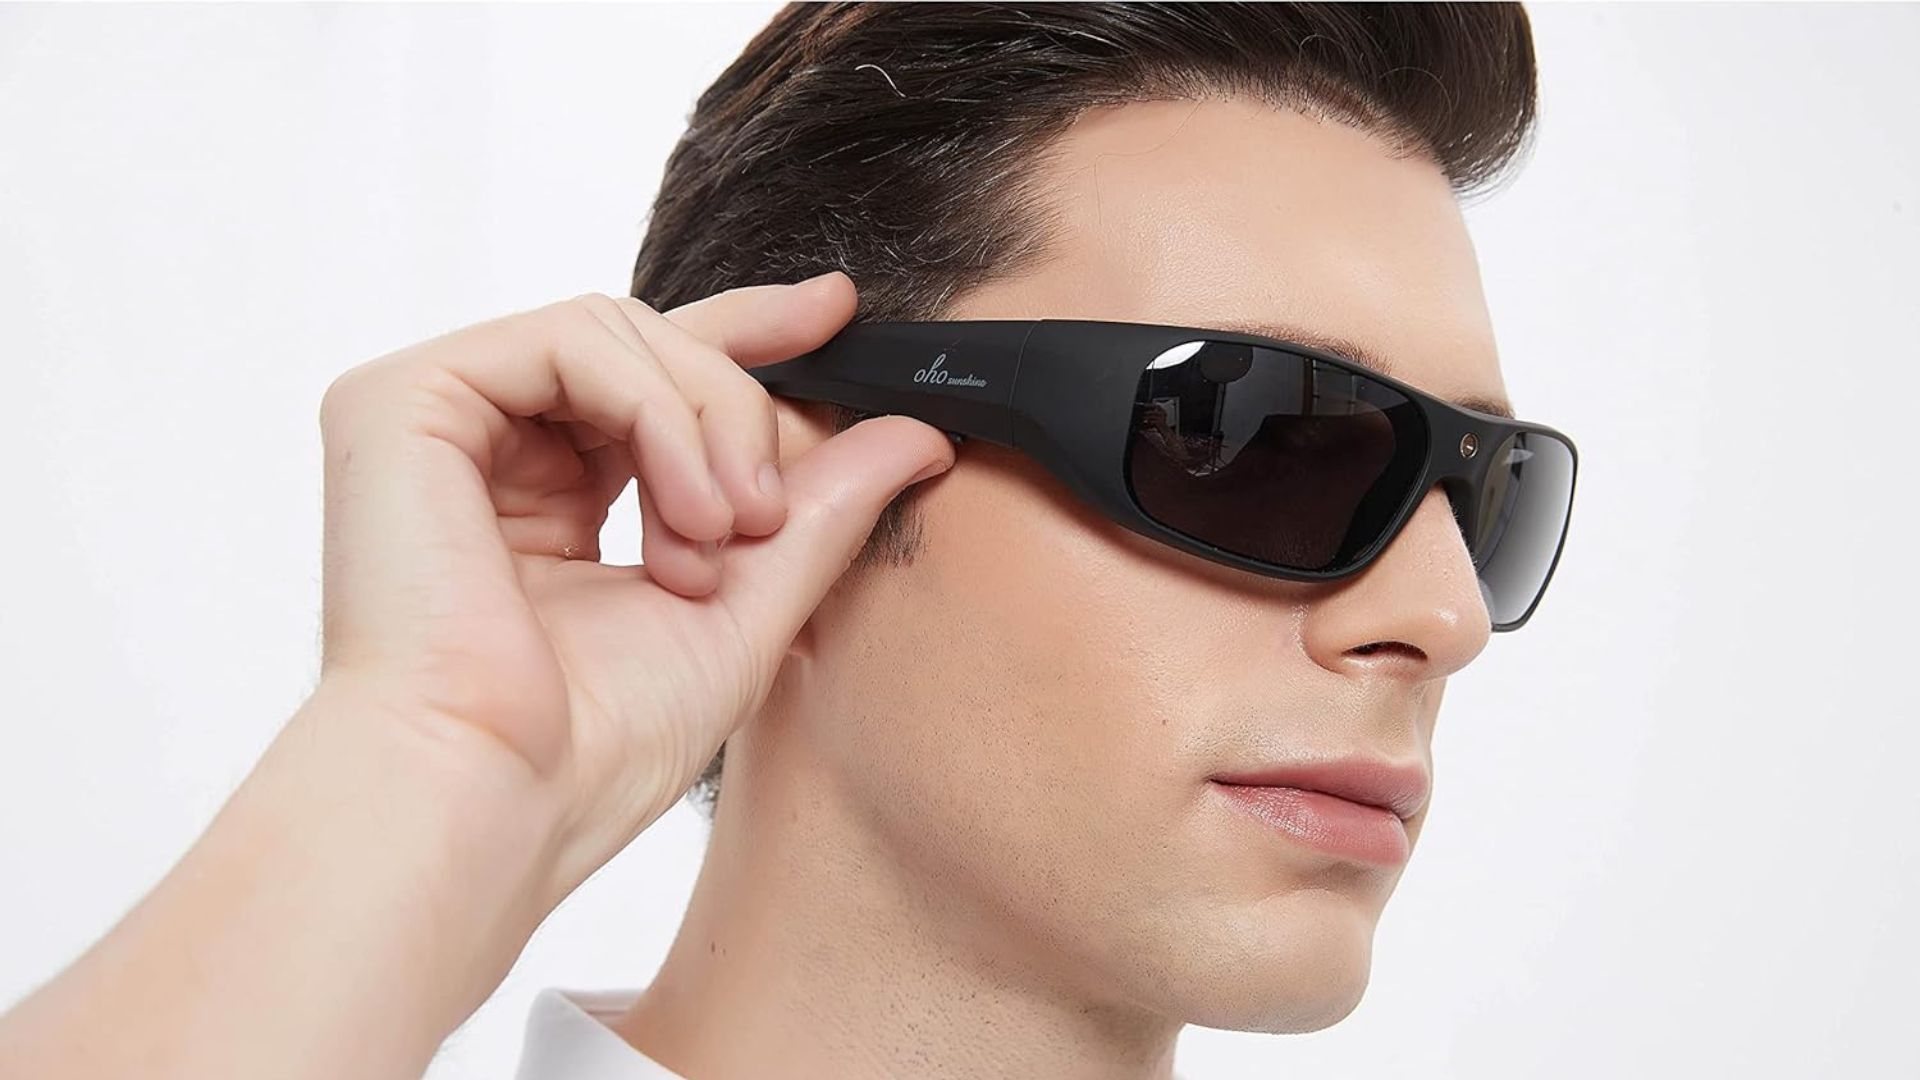 Amazon.com: OhO Smart Glasses,Polarized Sunglasses with Bluetooth  Speaker,Athletic/Outdoor UV Protection and Voice Control,Unisex :  Electronics